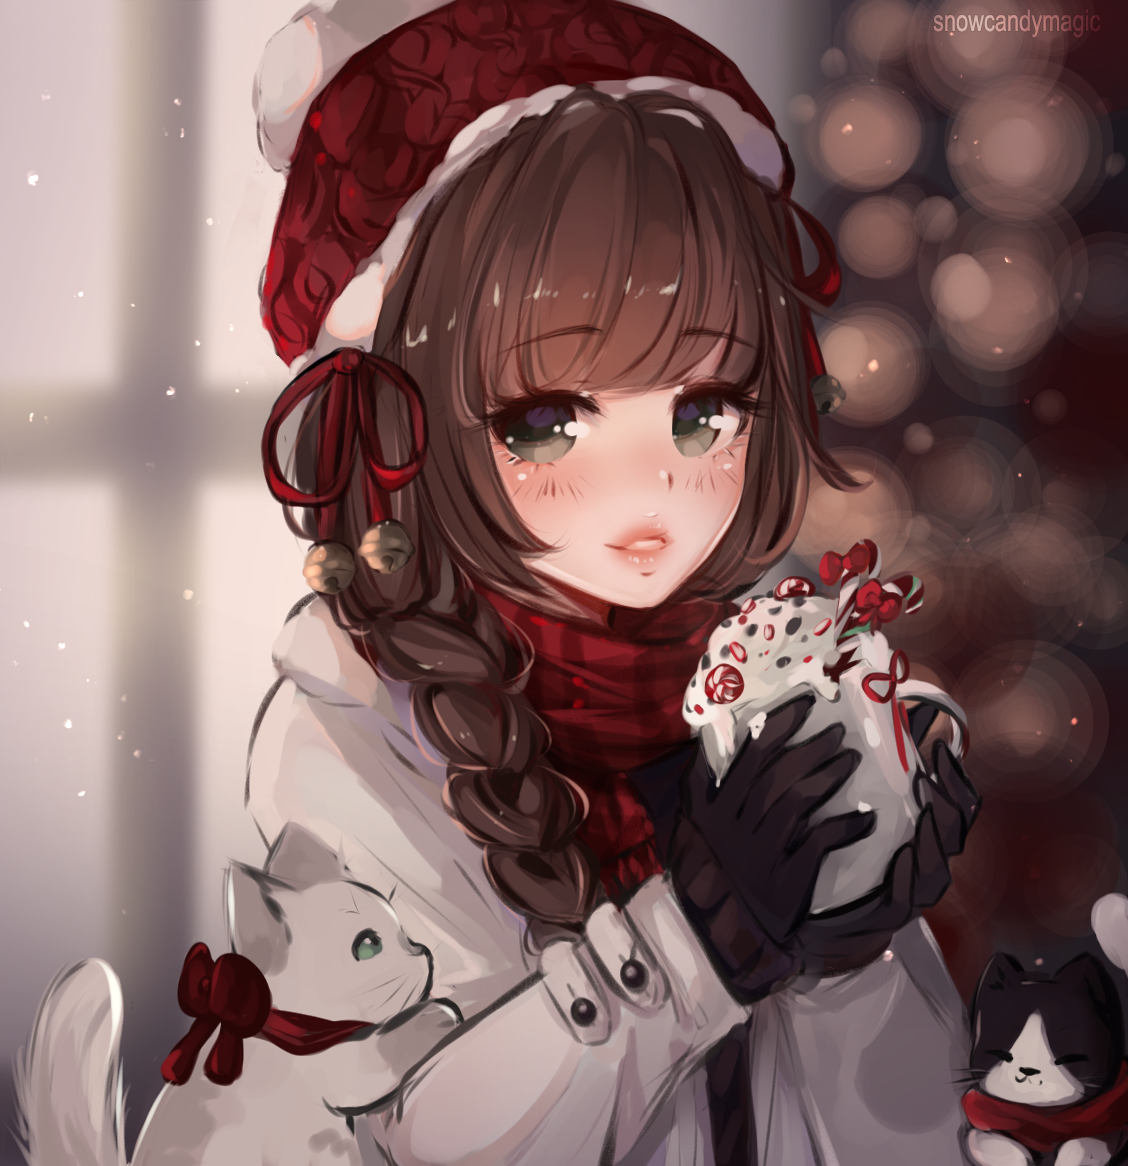 Hot Chocolate by Snowcandymagic on DeviantArt